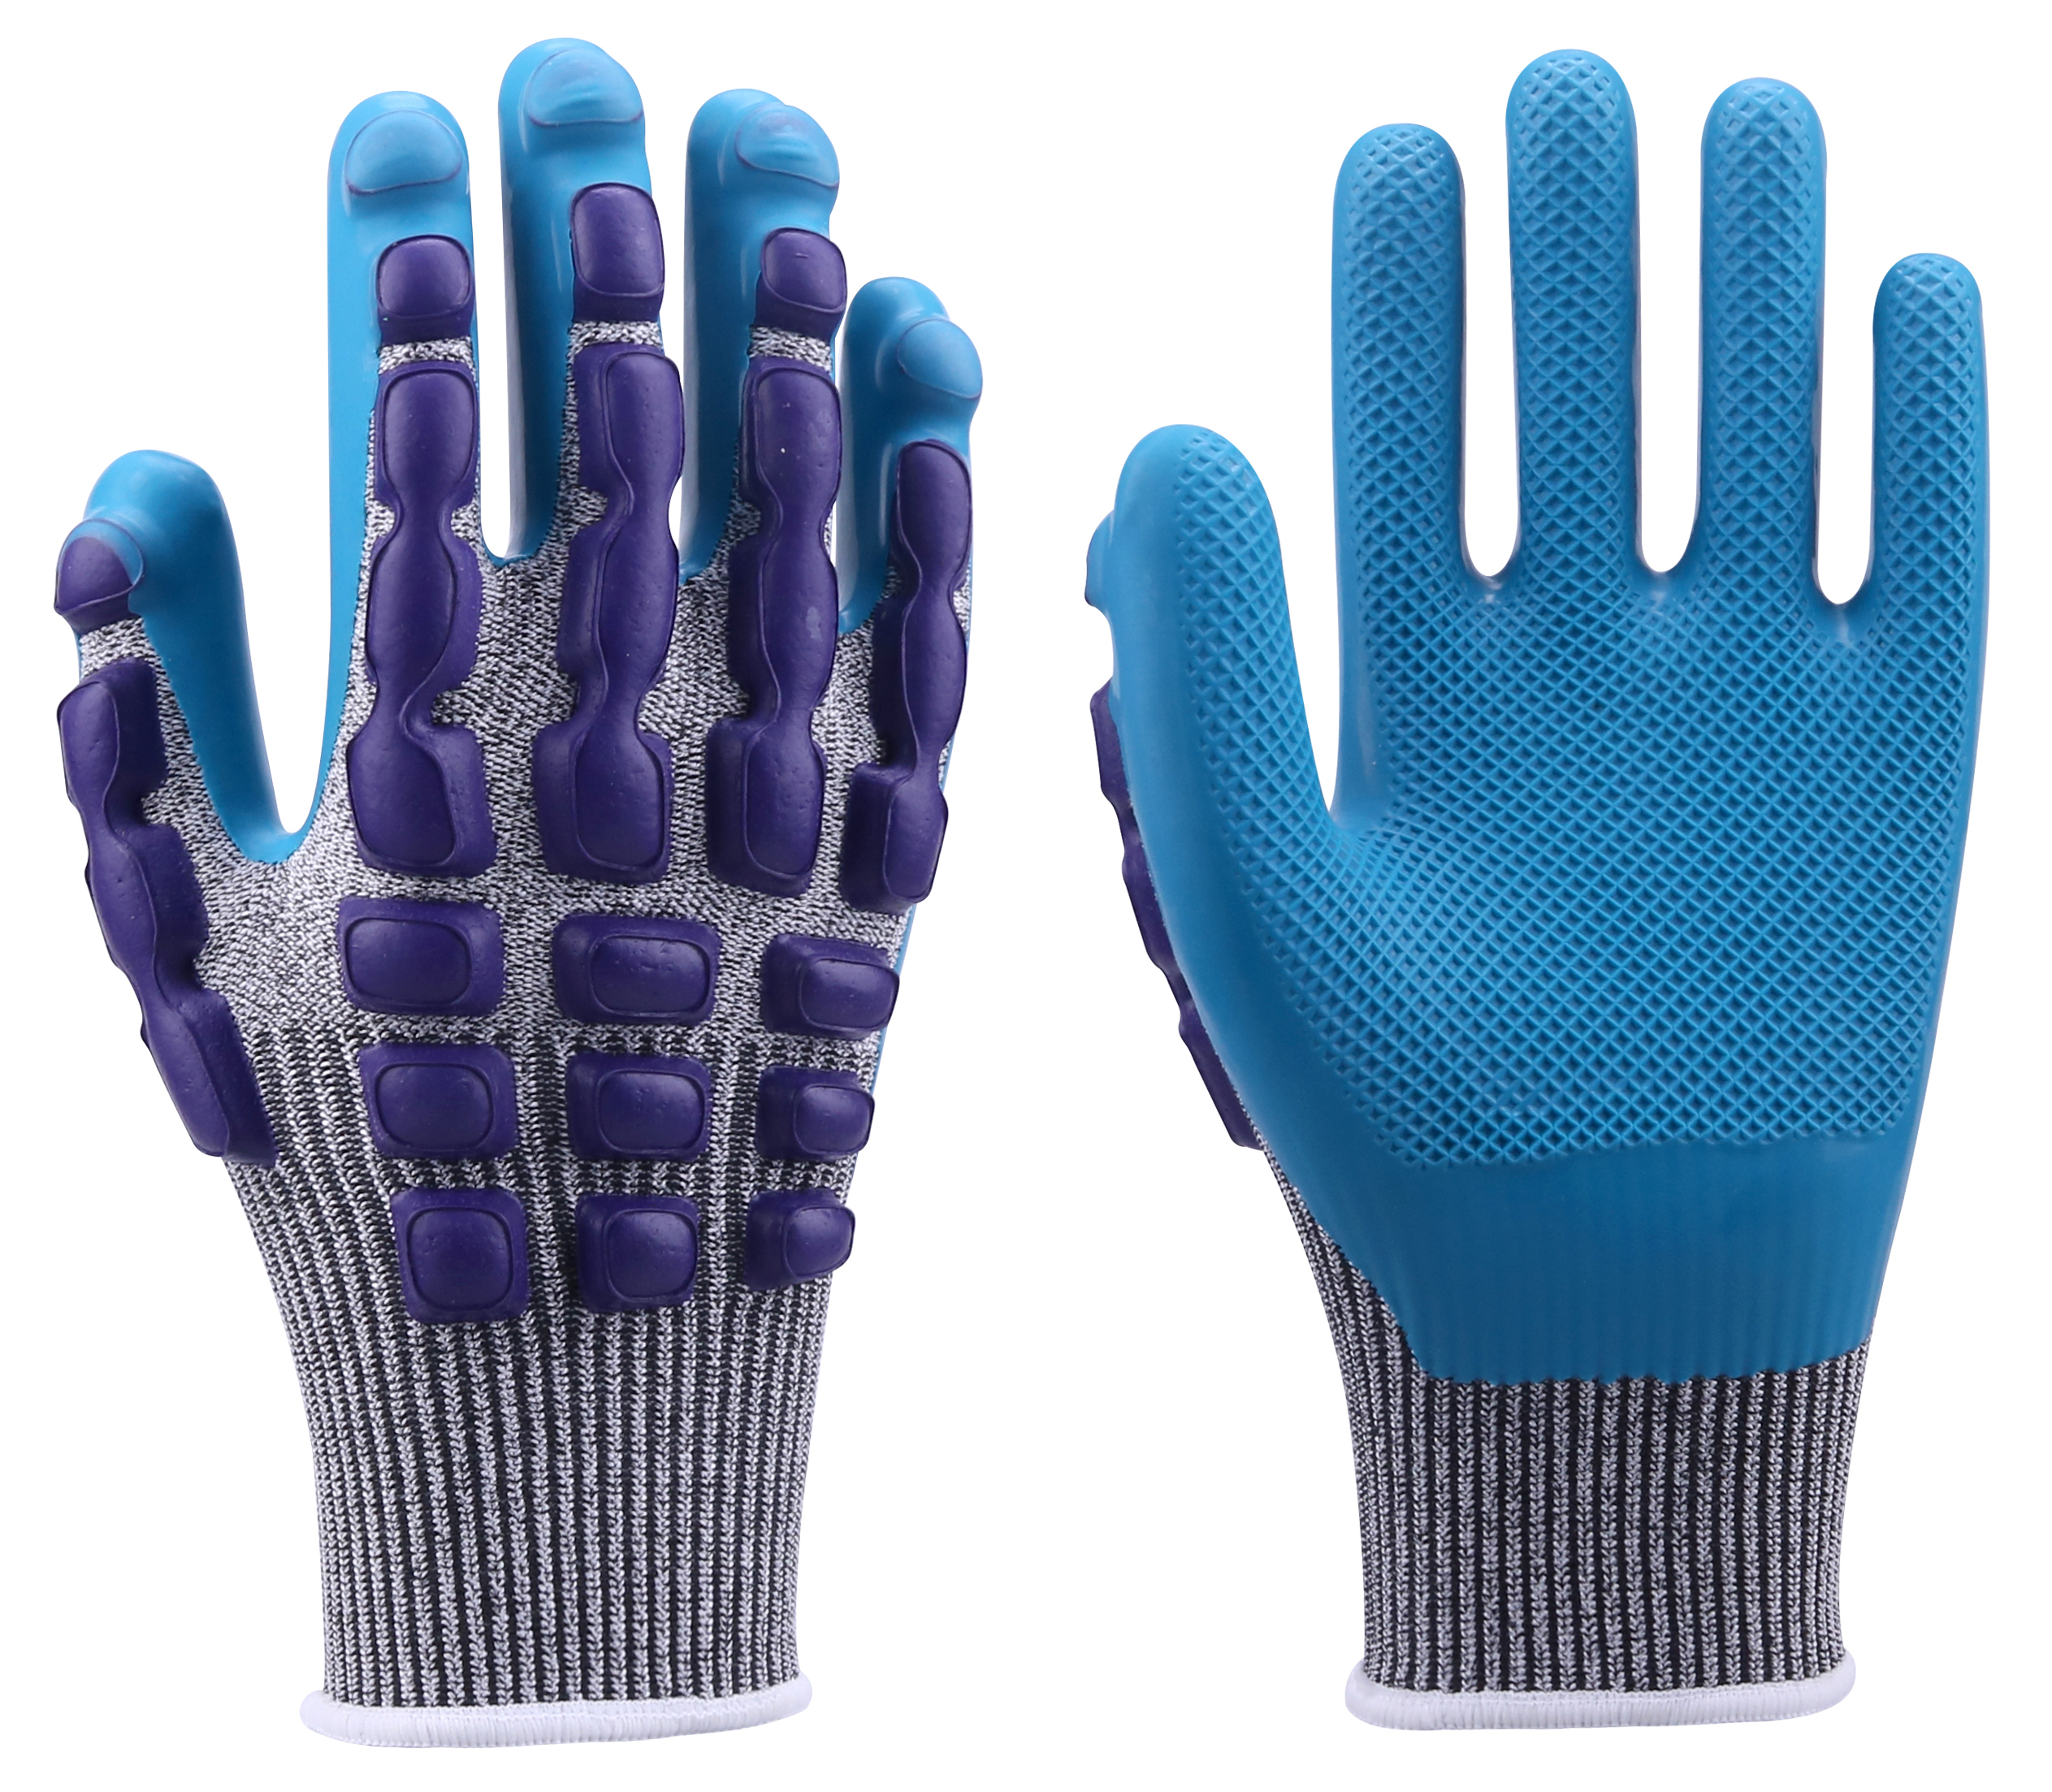  13 gauge HPPE Impact Resistant & Cut Resistant Gloves